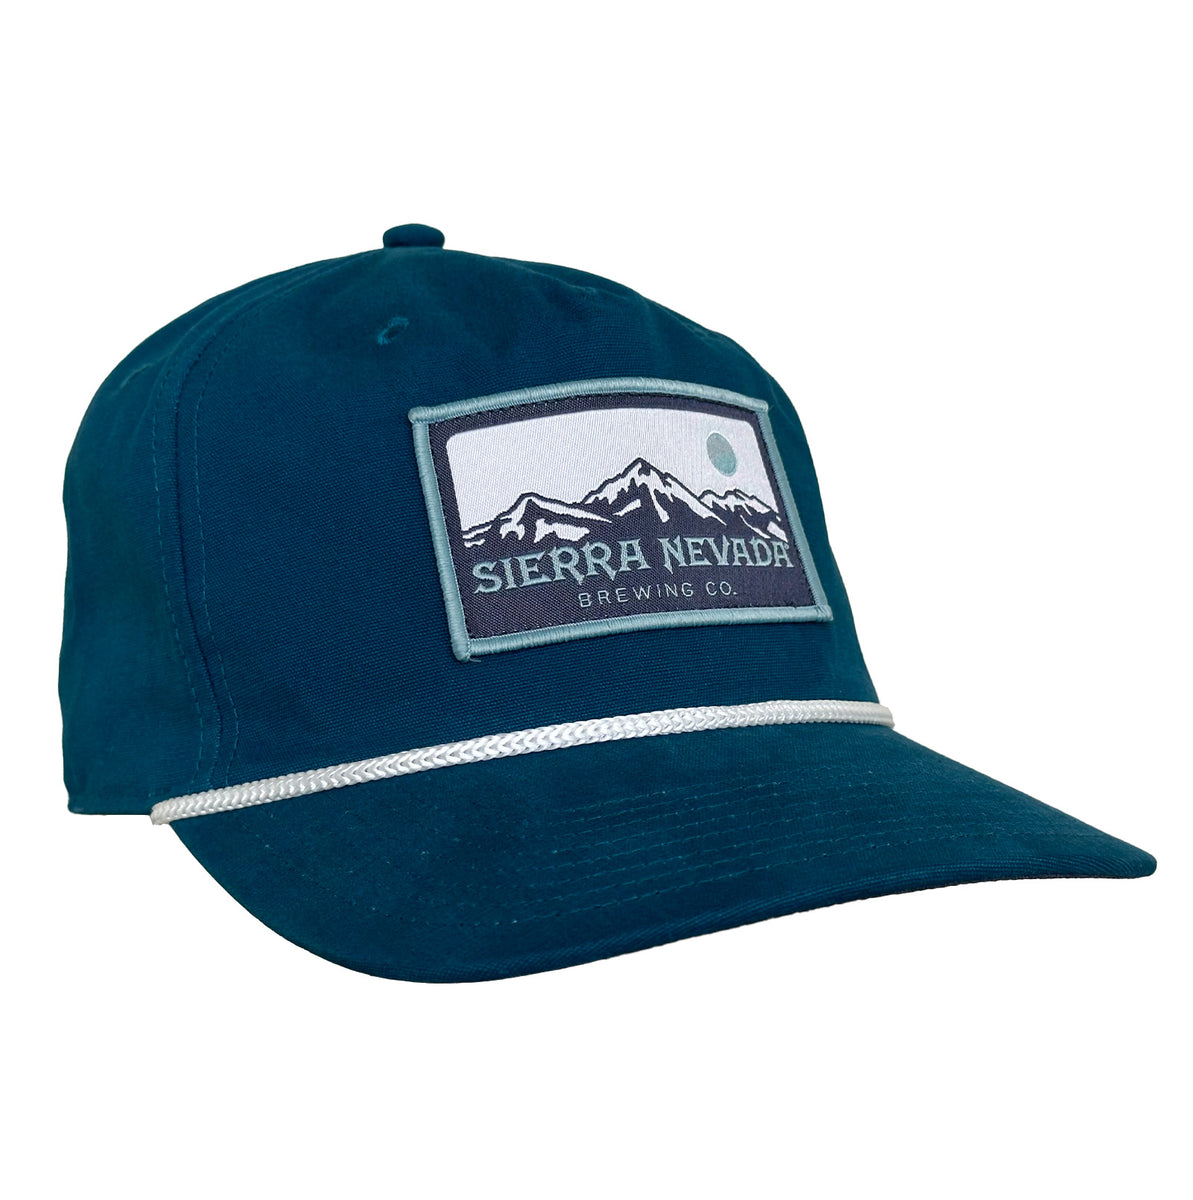 Sierra Nevada Brewing Co. Monochrome Mountain Range Golfer Hat in Teal - front view